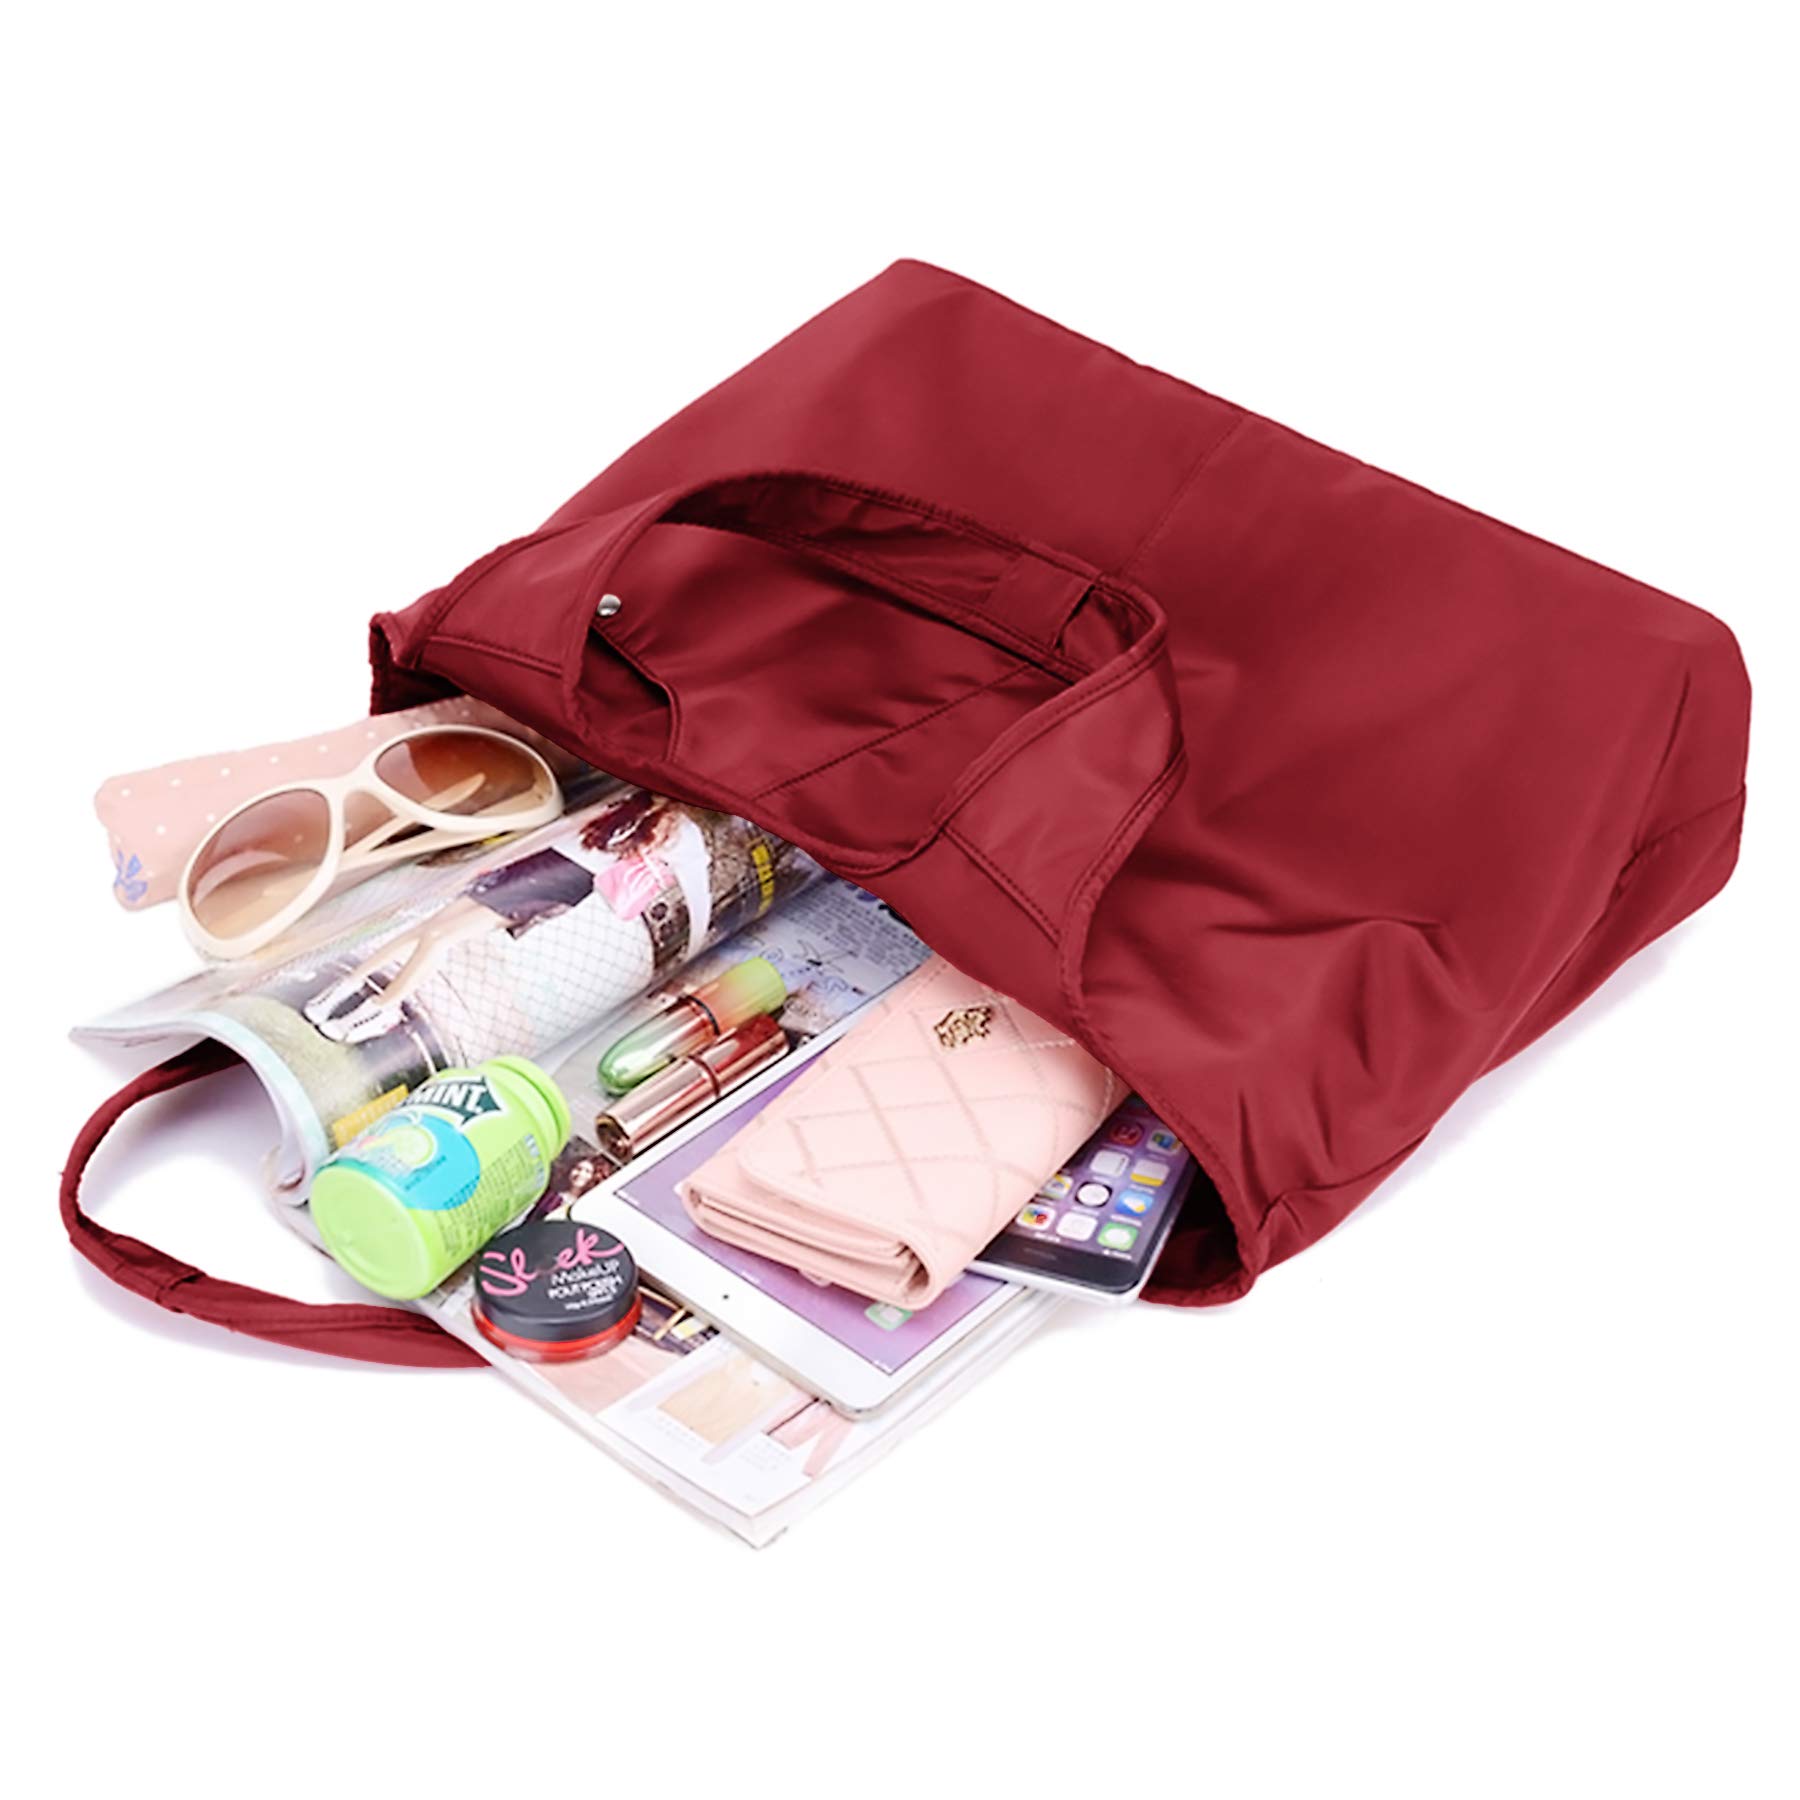 ZOOEASS Women Fashion Large Tote Shoulder Handbag Waterproof Tote Bag Multi-function Nylon Travel Shoulder